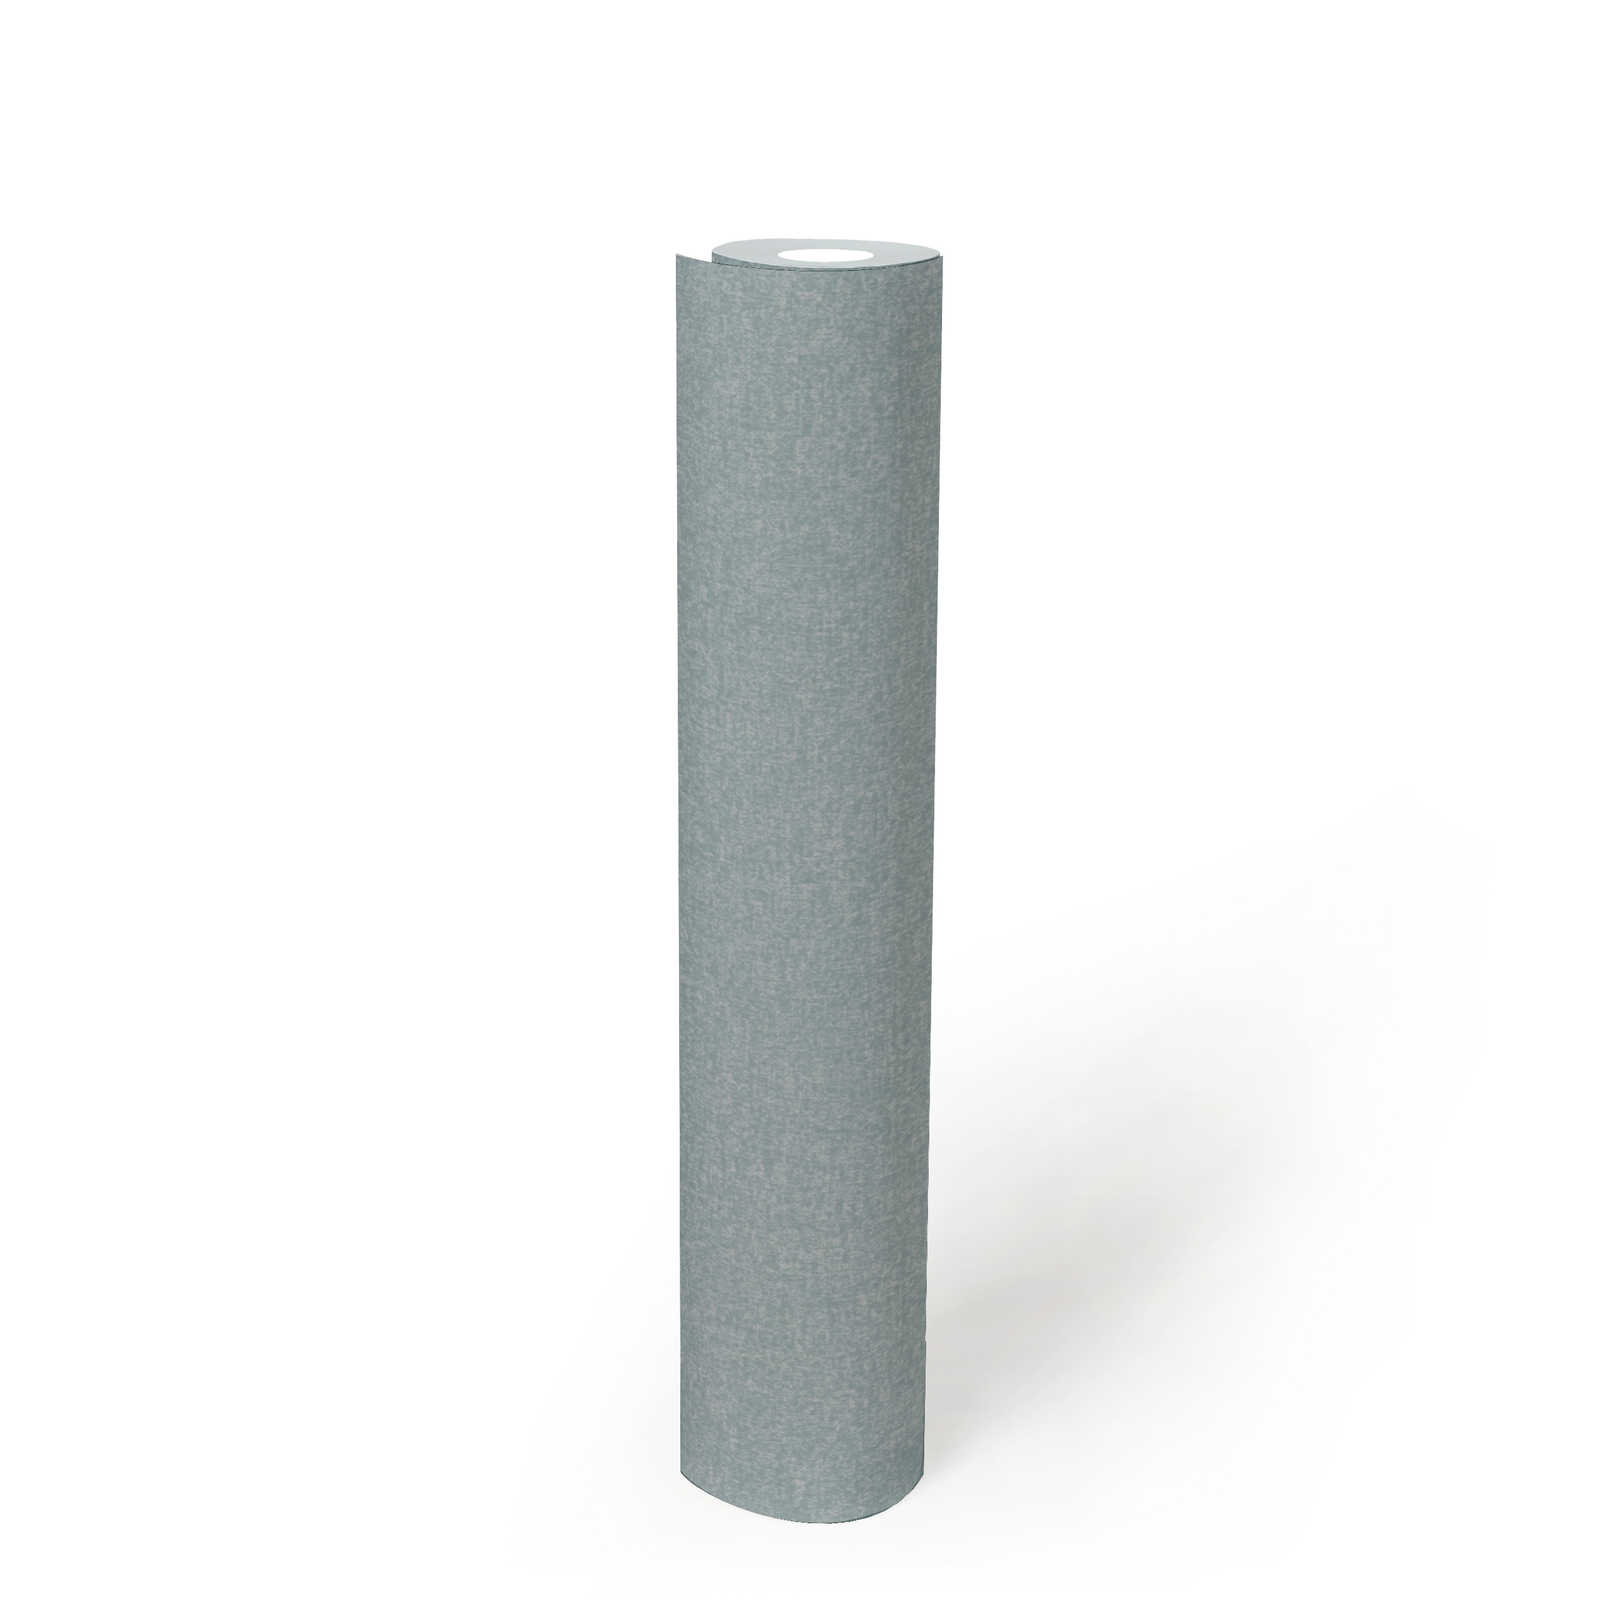             Non-woven tapisserie Uni met structuurpatroon - Turquoise
        